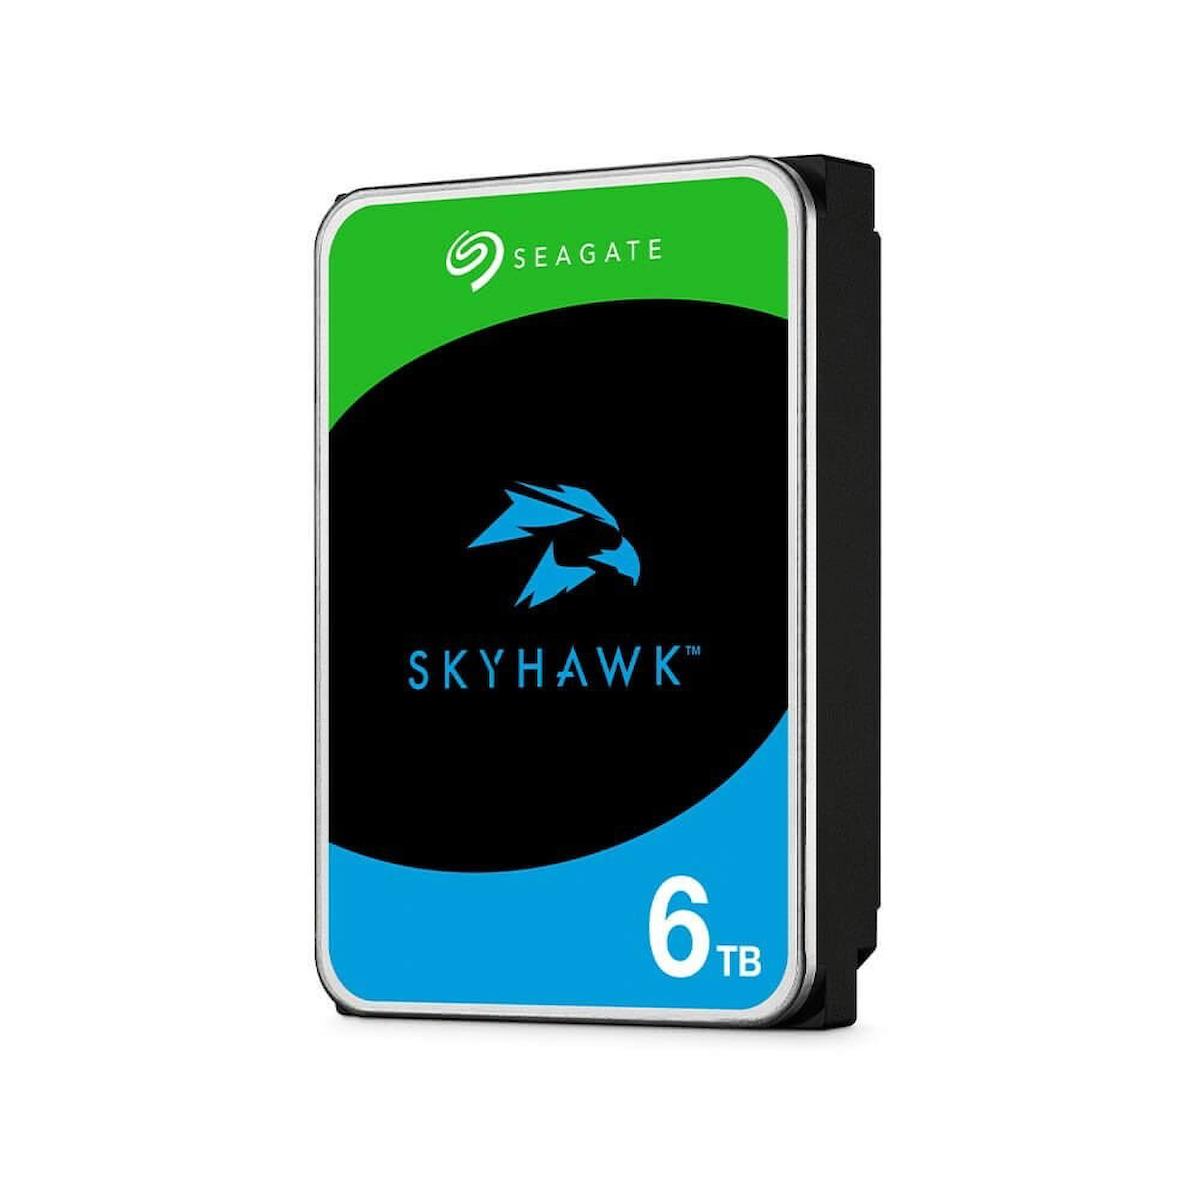 Seagate Skyhawk ST6000VX009 6 TB 3.5 inç 5400 RPM 256 MB SATA 3.0 Güvenlik Kamerası Harddisk